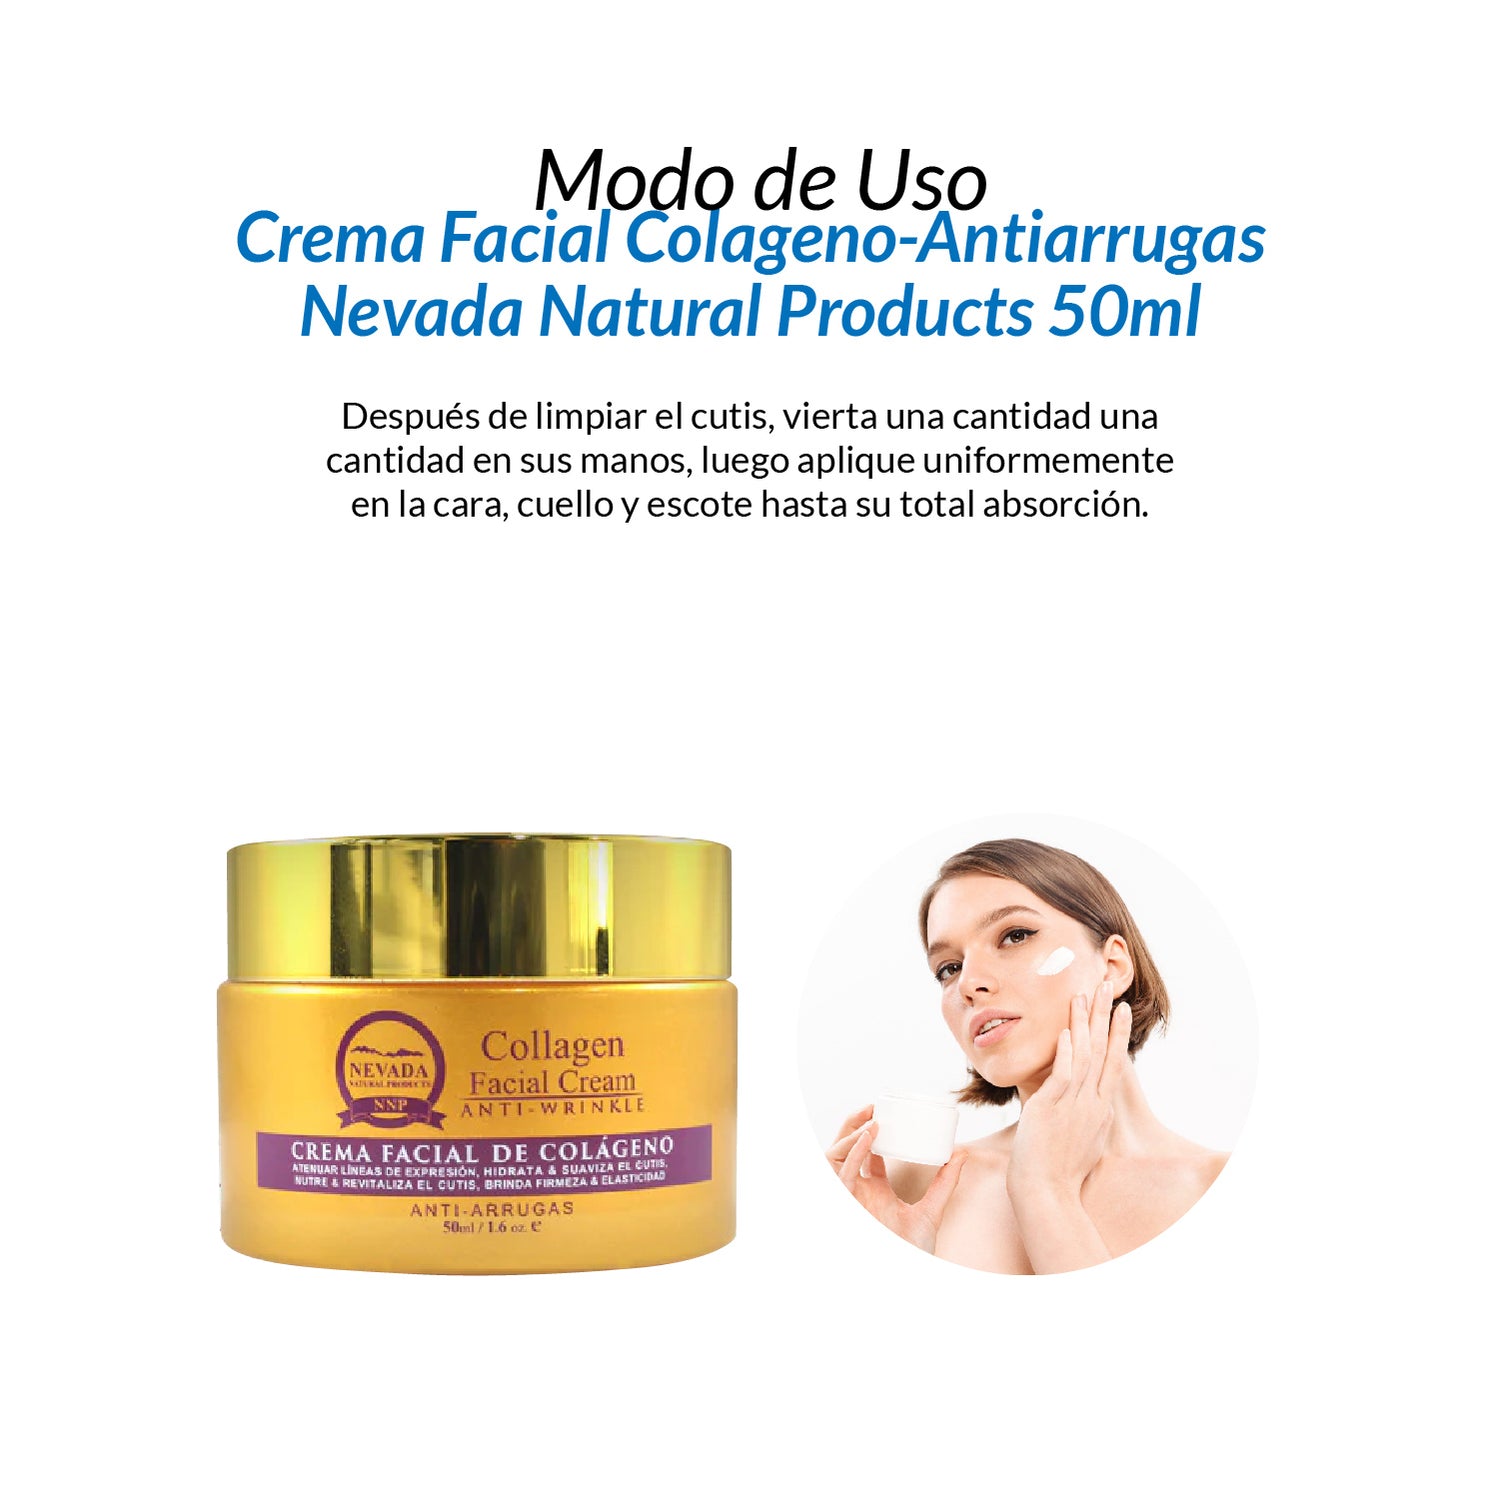 Crema Facial Colageno-Antiarrugas Nevada Natural Products 50ml